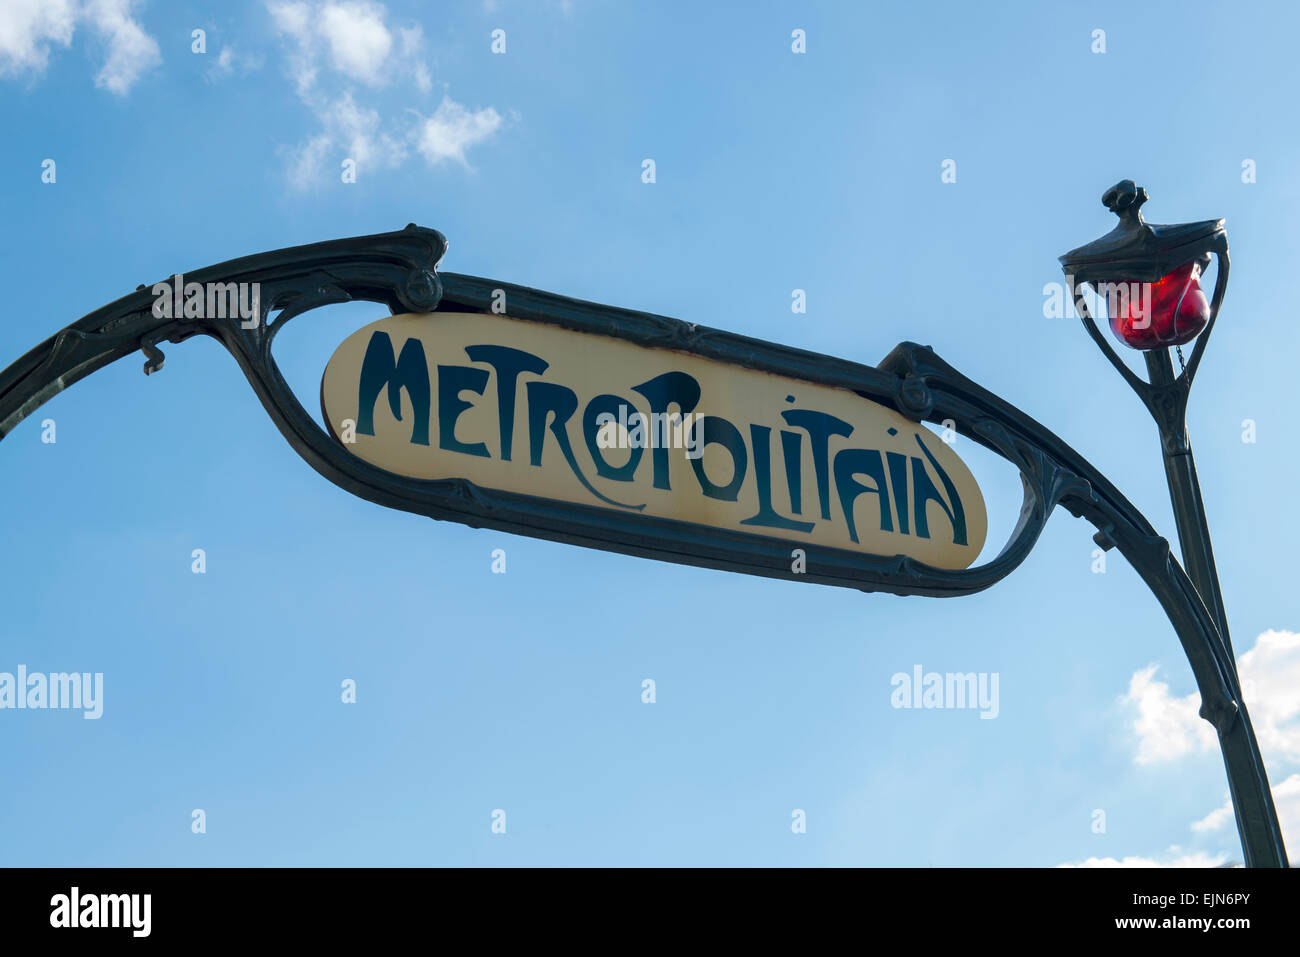 Famous Art Nouveau sign for the Metropolitain underground system in Paris, France. Stock Photo